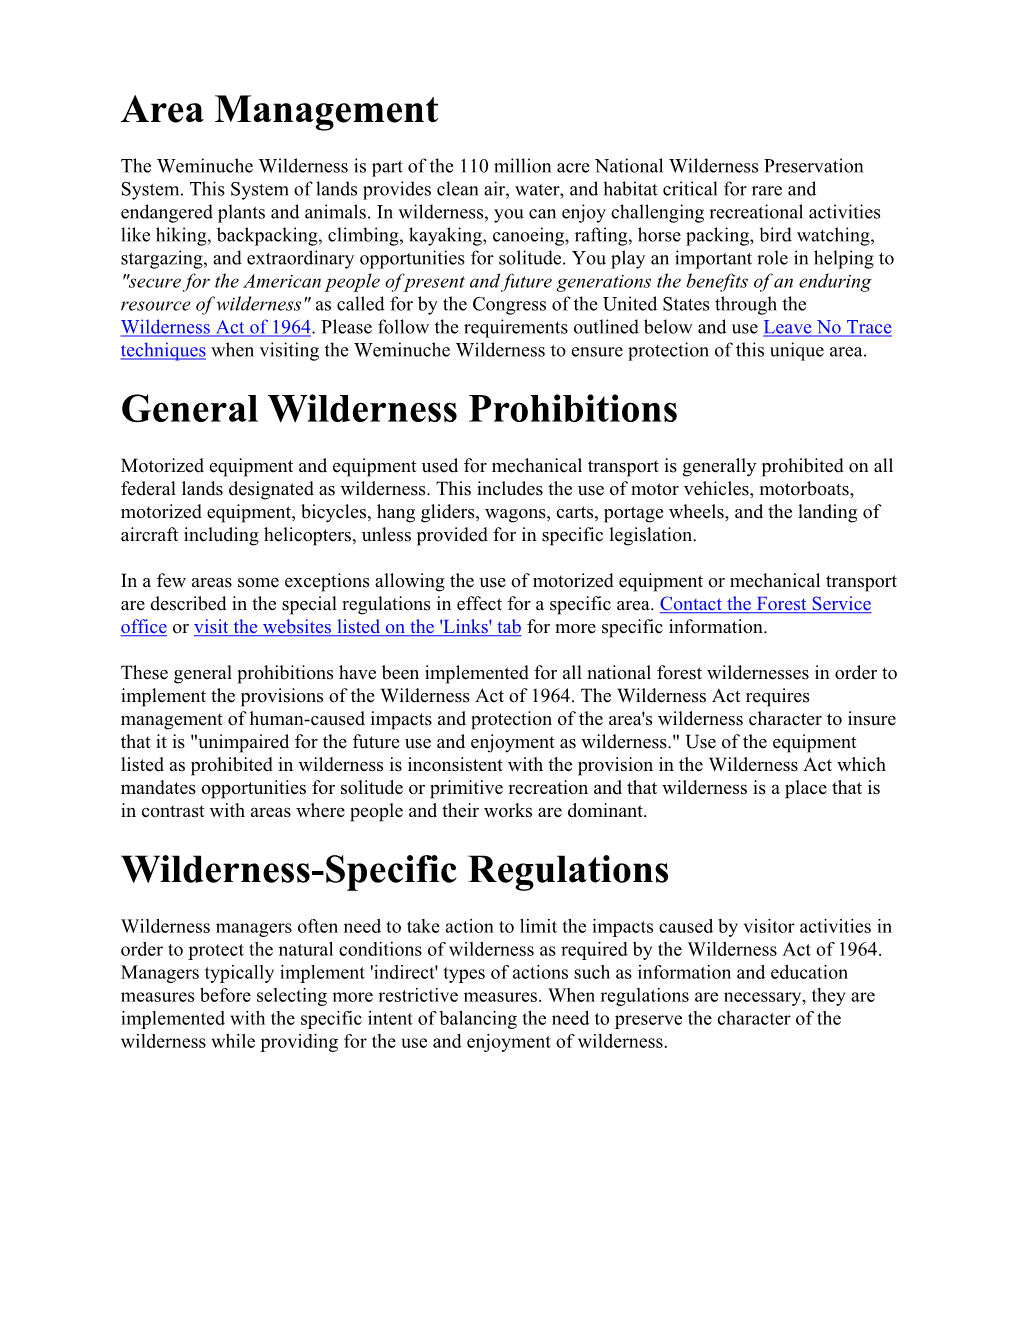 Regulations for Wilderness Area